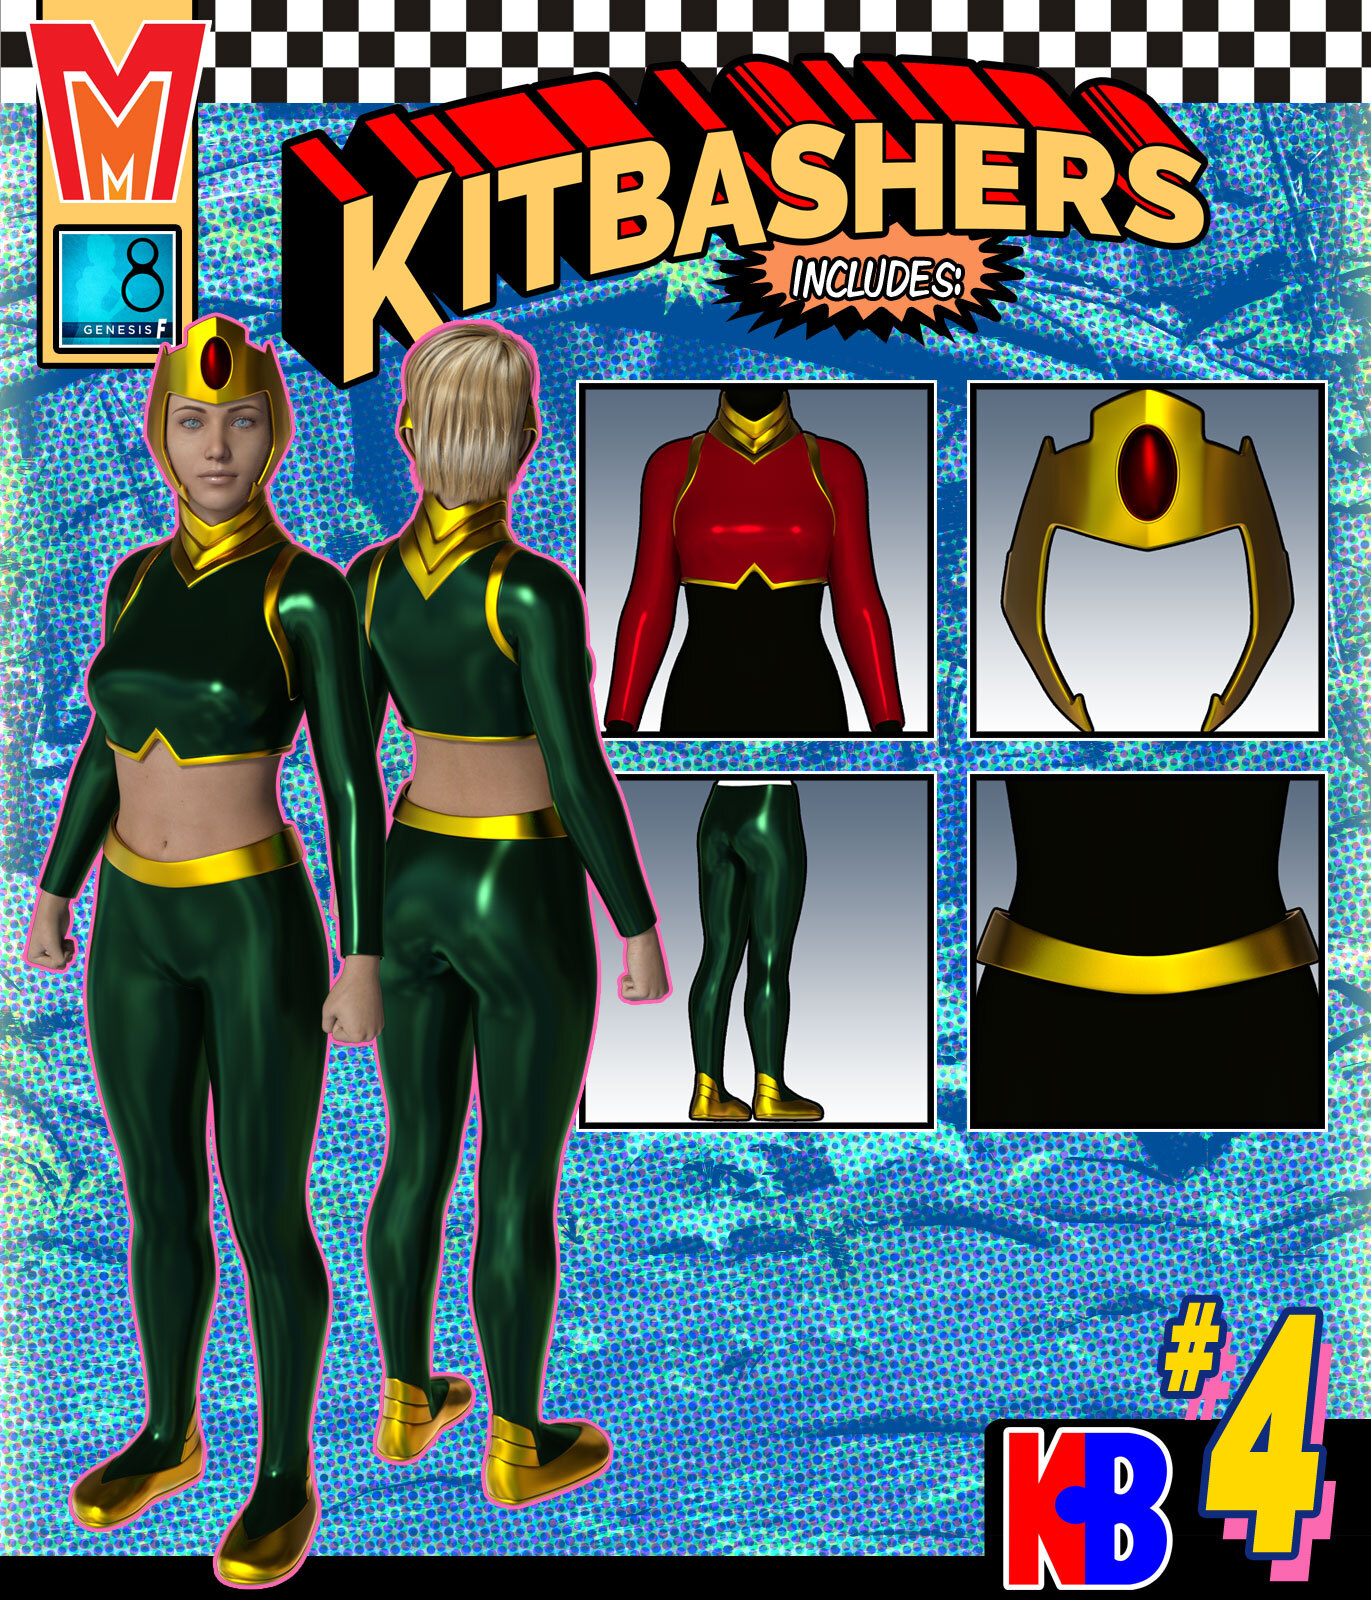 Kitbashers 004 MMG8F by: MightyMite, 3D Models by Daz 3D